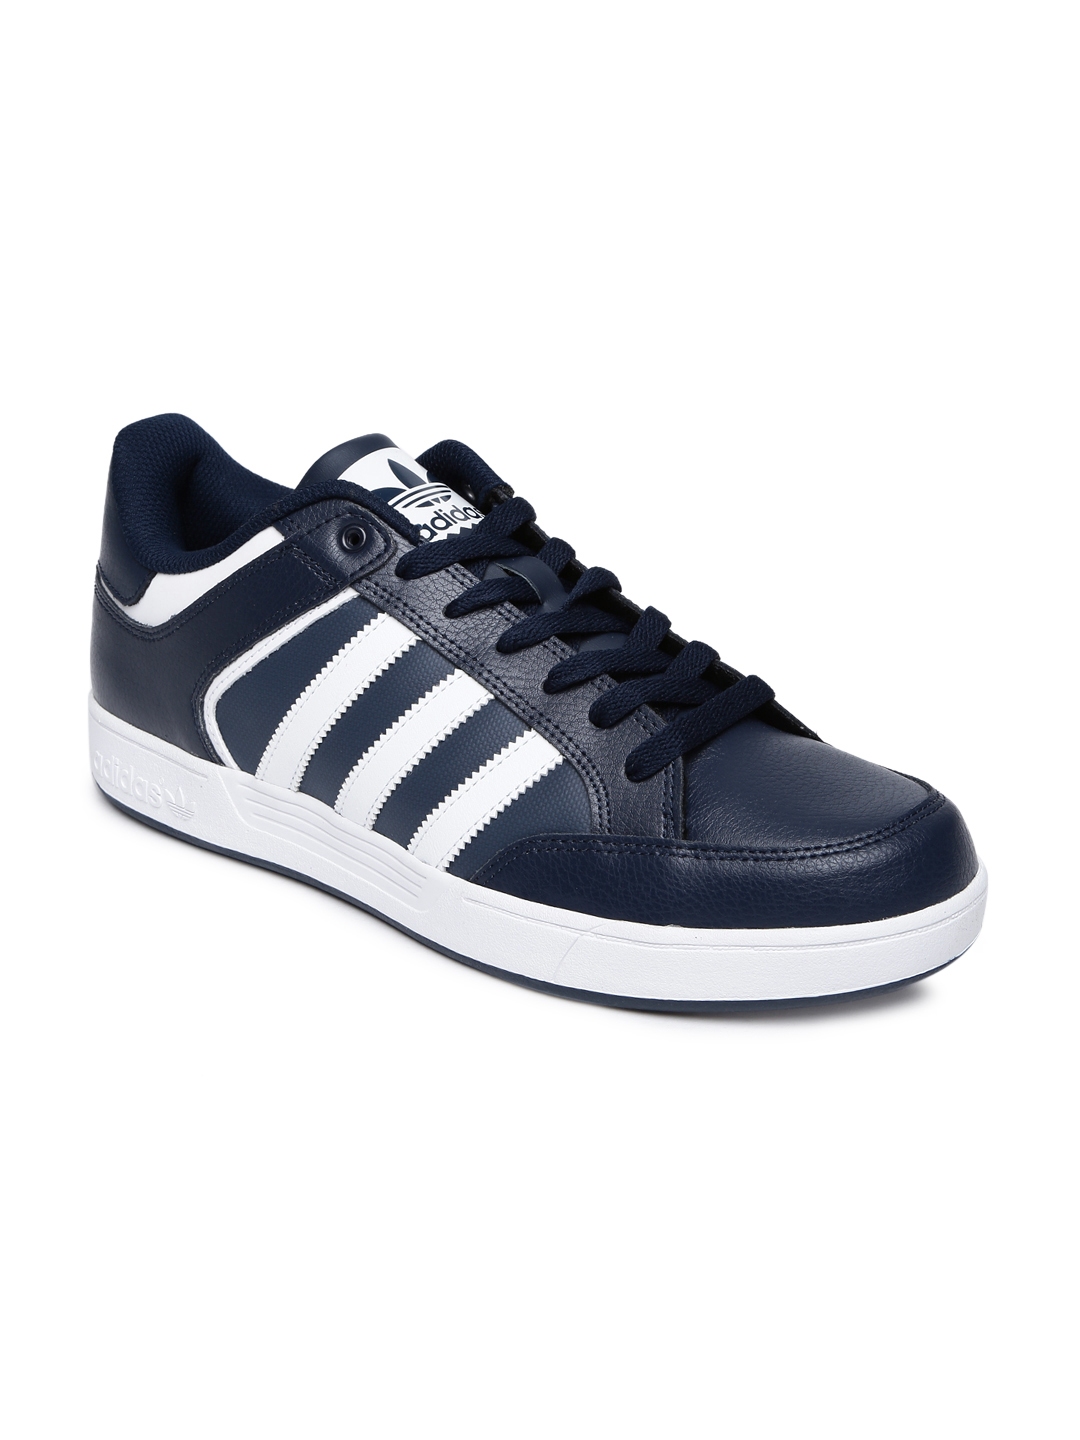 Buy ADIDAS Originals Men Navy Blue Varial Low Skate Shoes - Casual ...